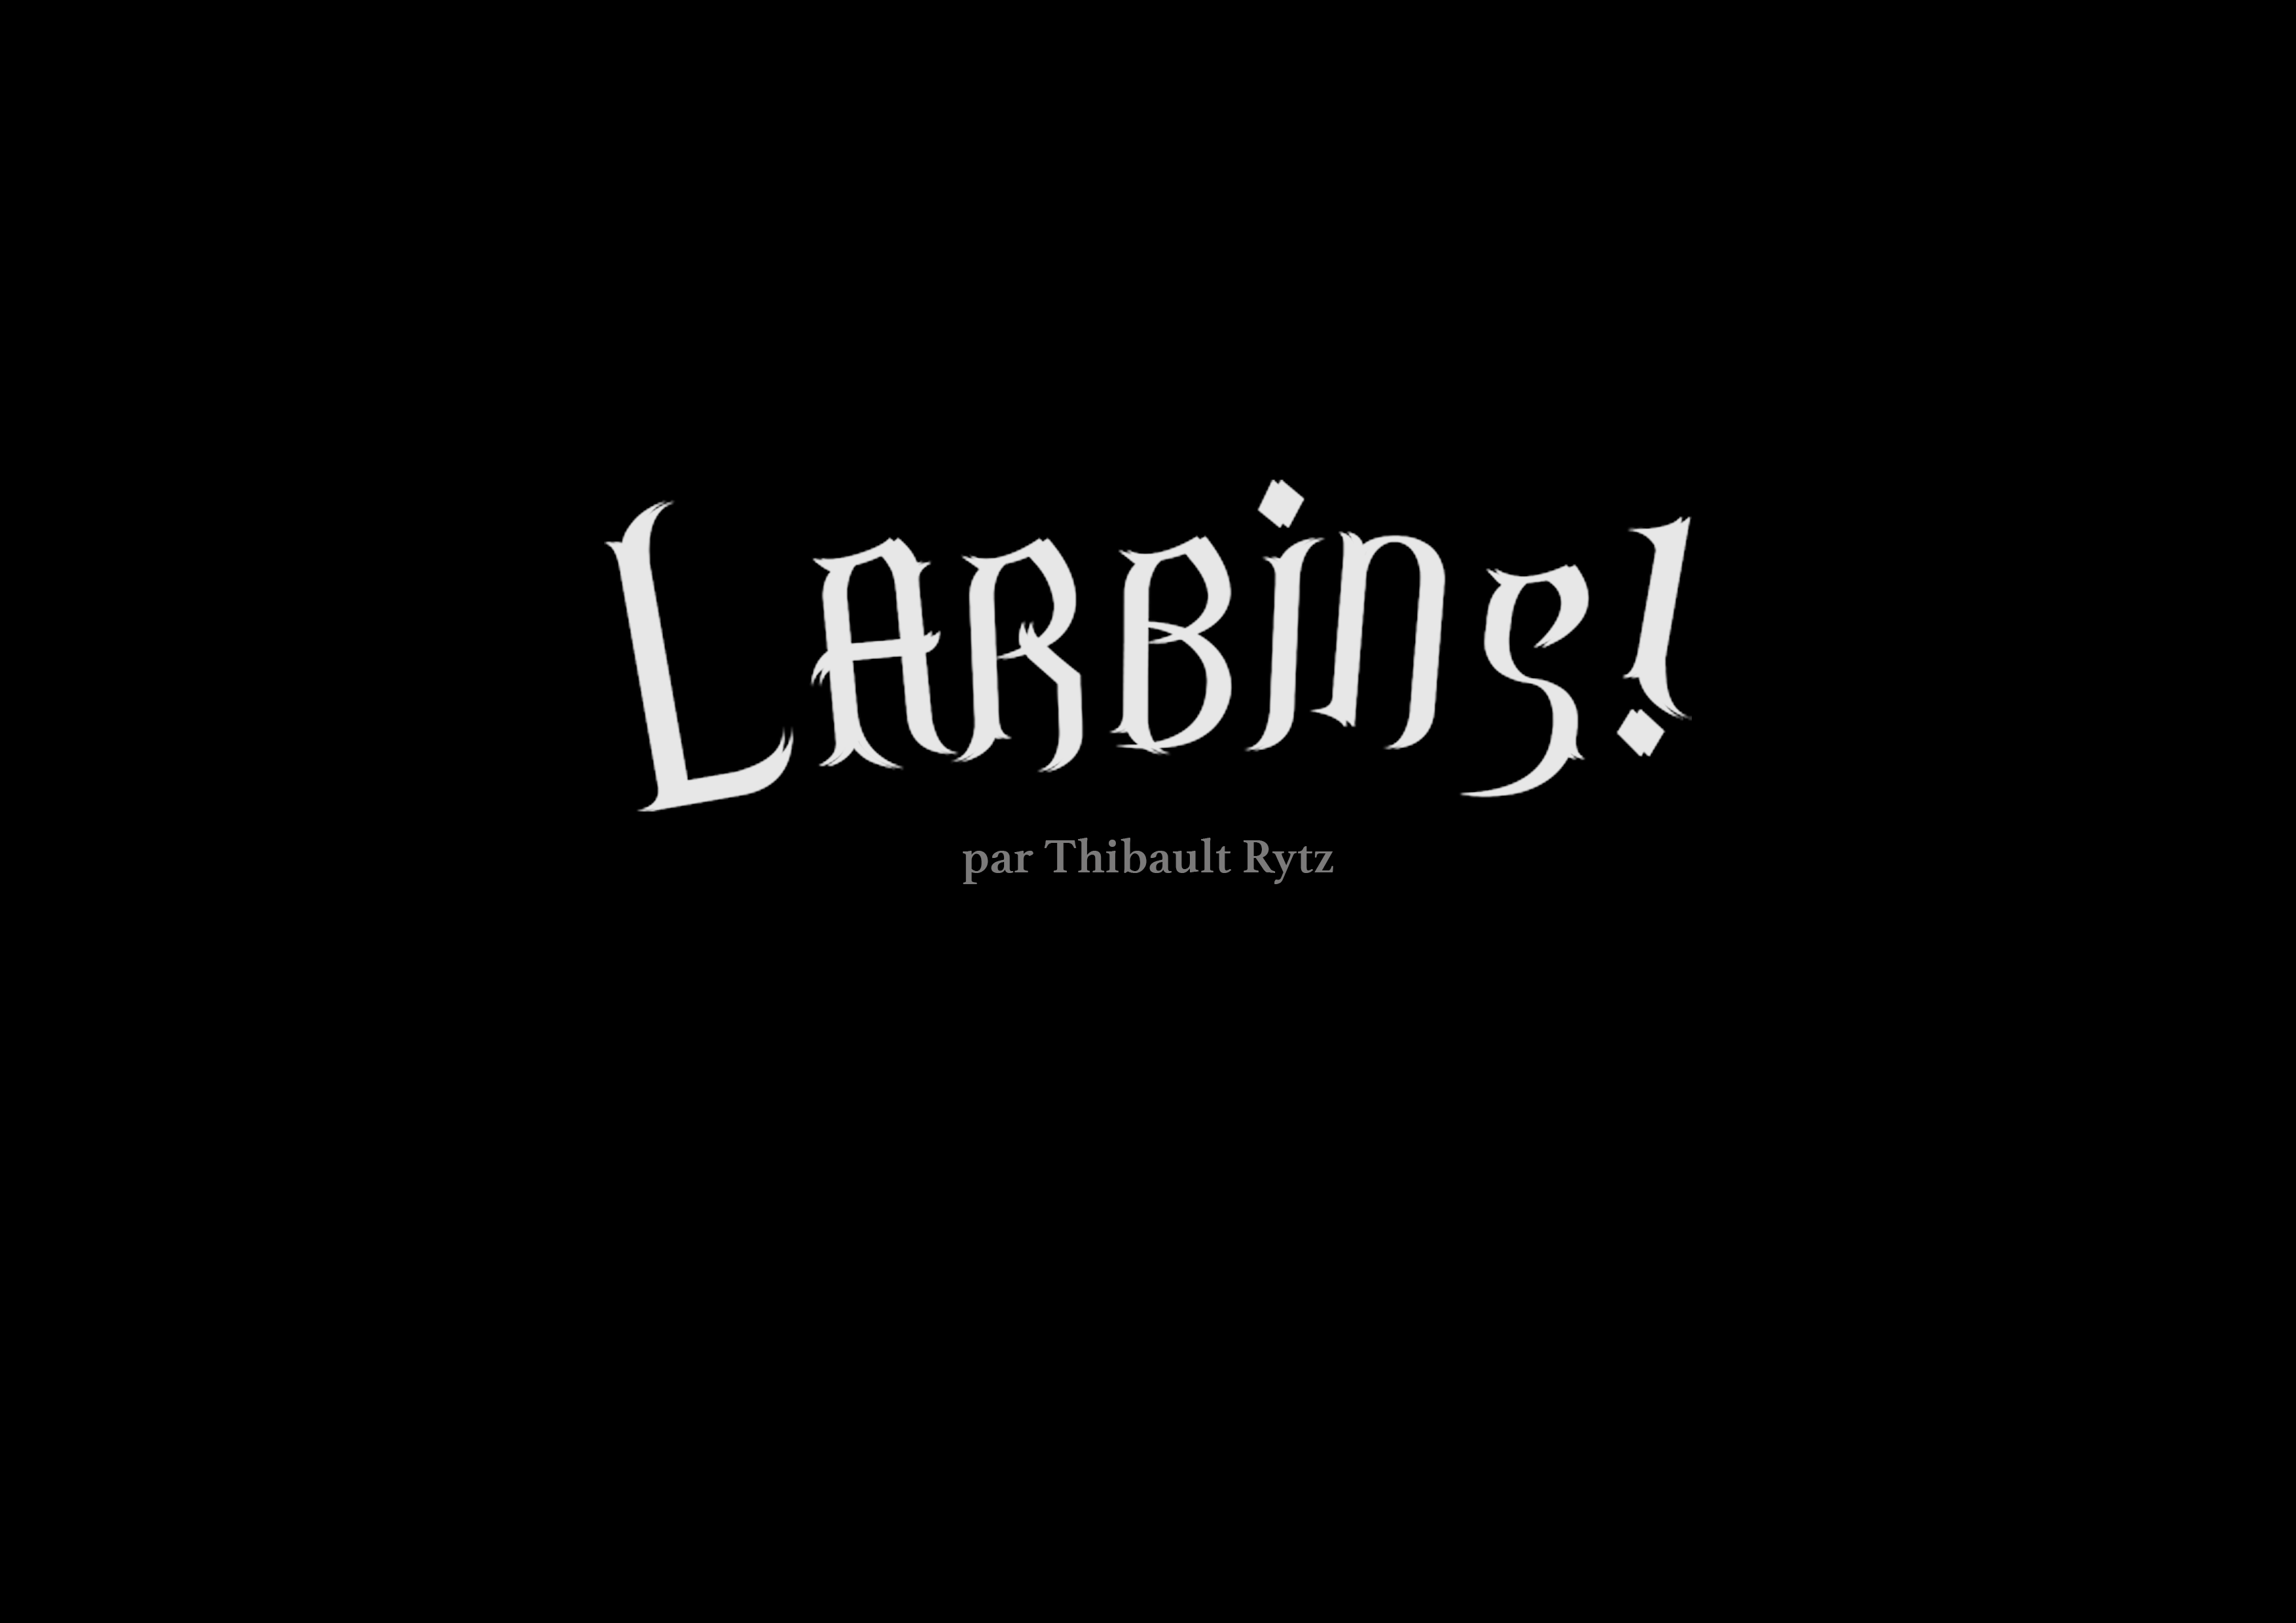 Larbins !